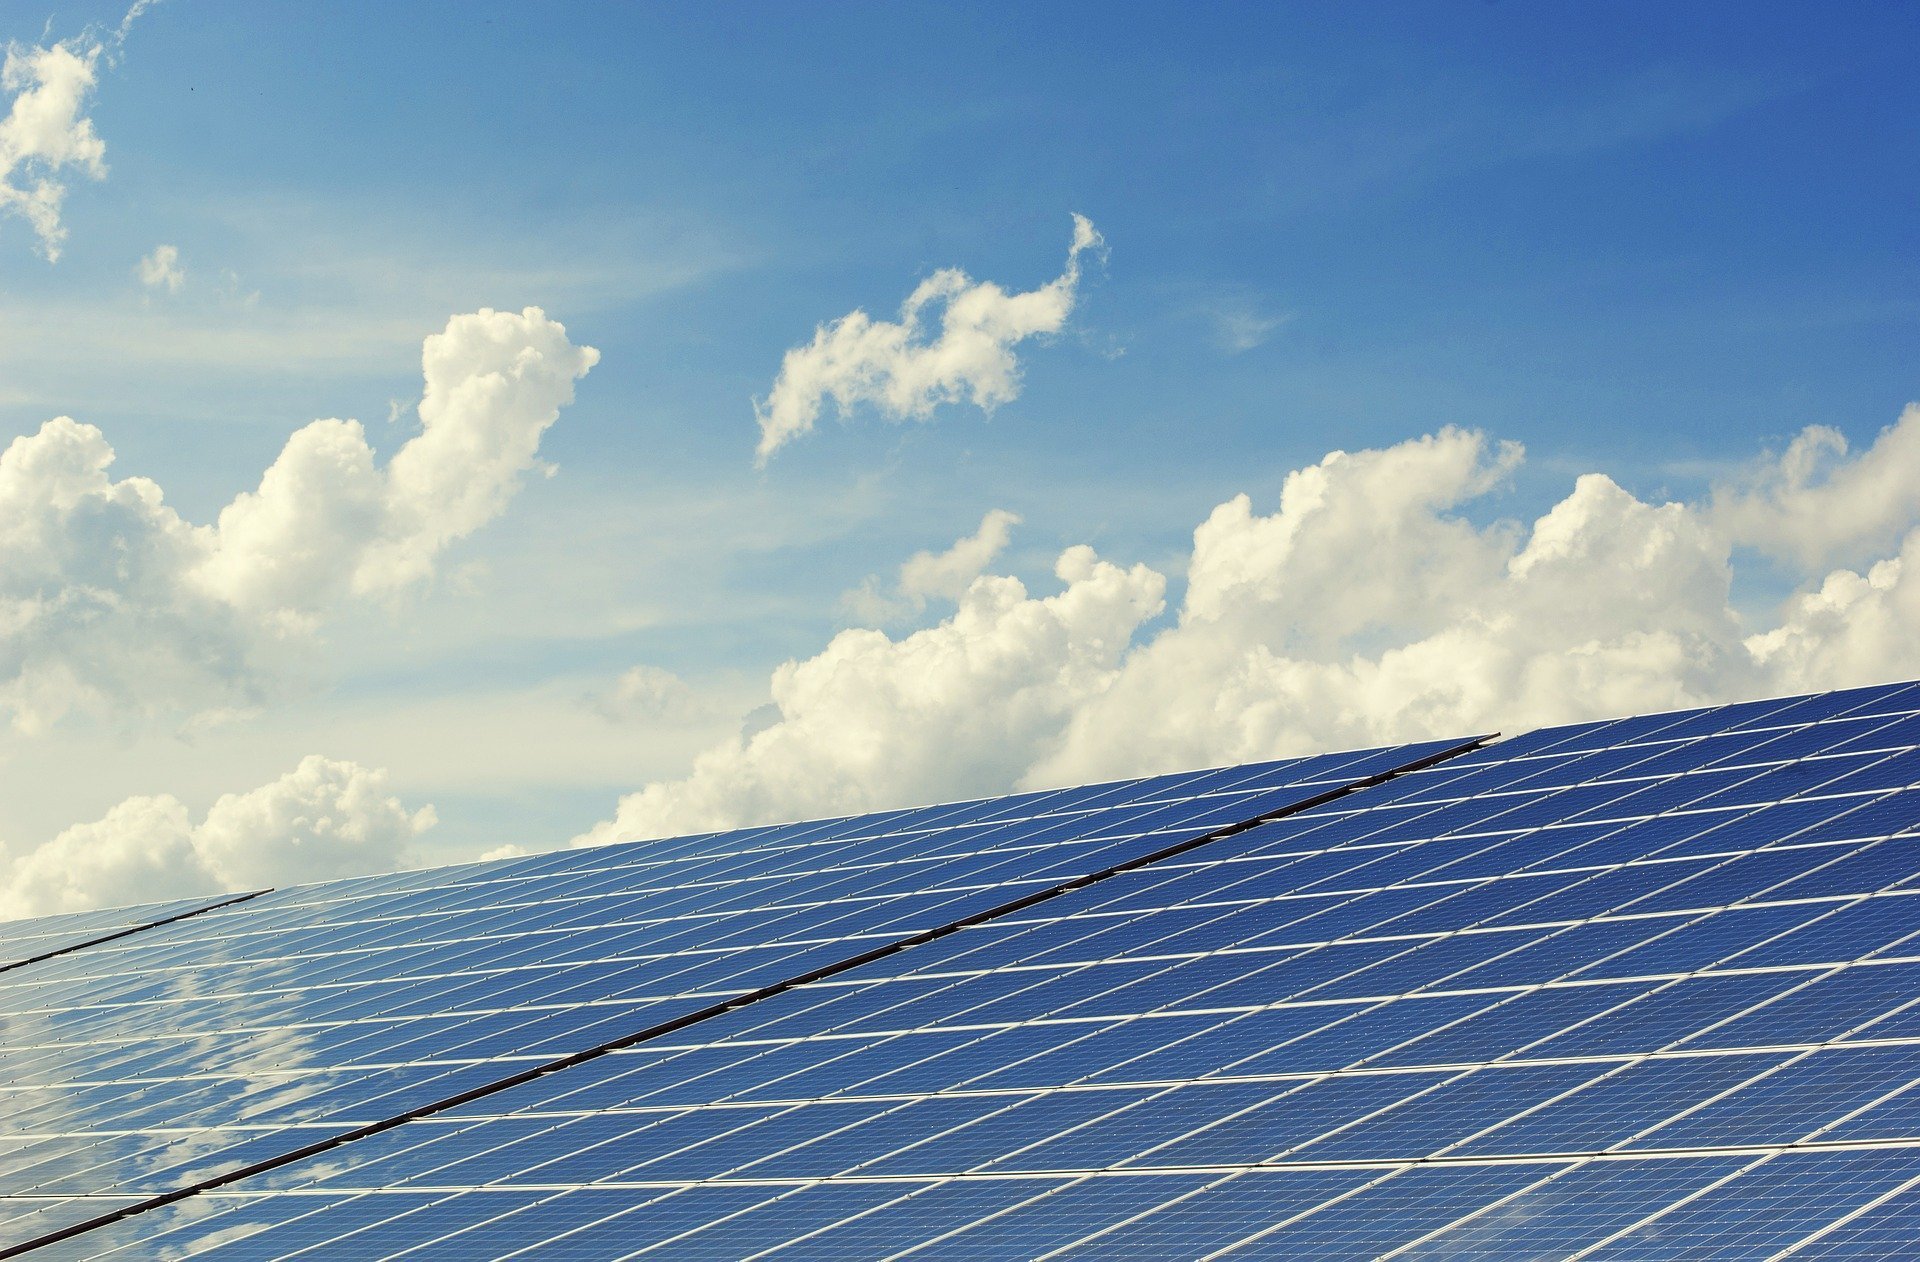 El sector fotovoltaic espanyol requerirà la millor tecnologia 5G